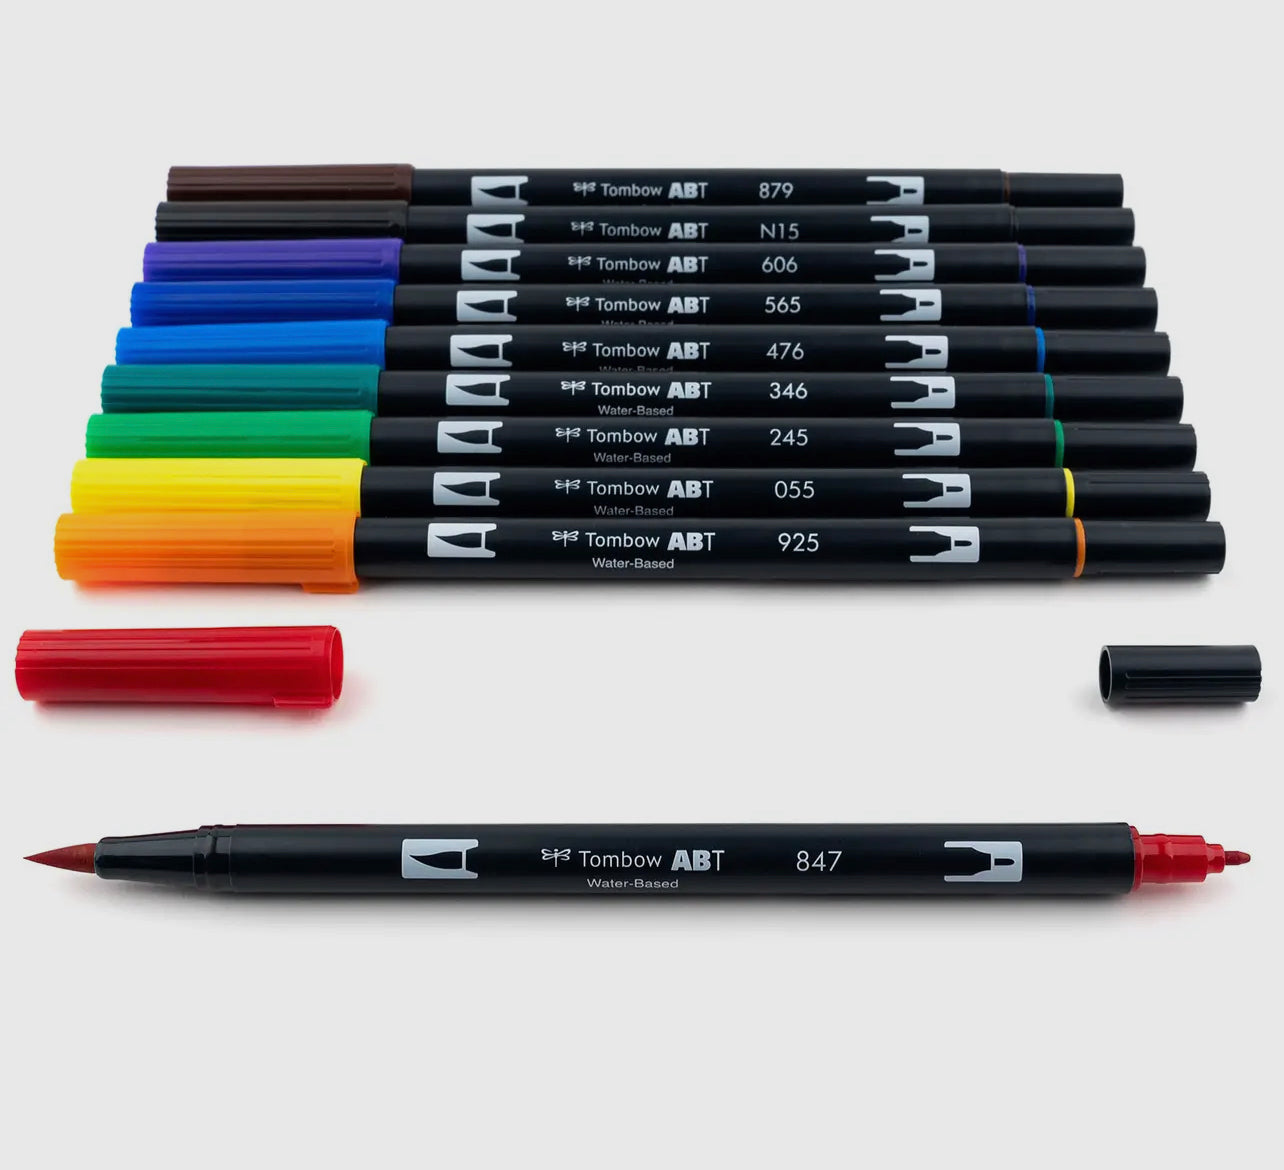 Dual Brush Pen Art Marker, Primary Colors, 10-pack